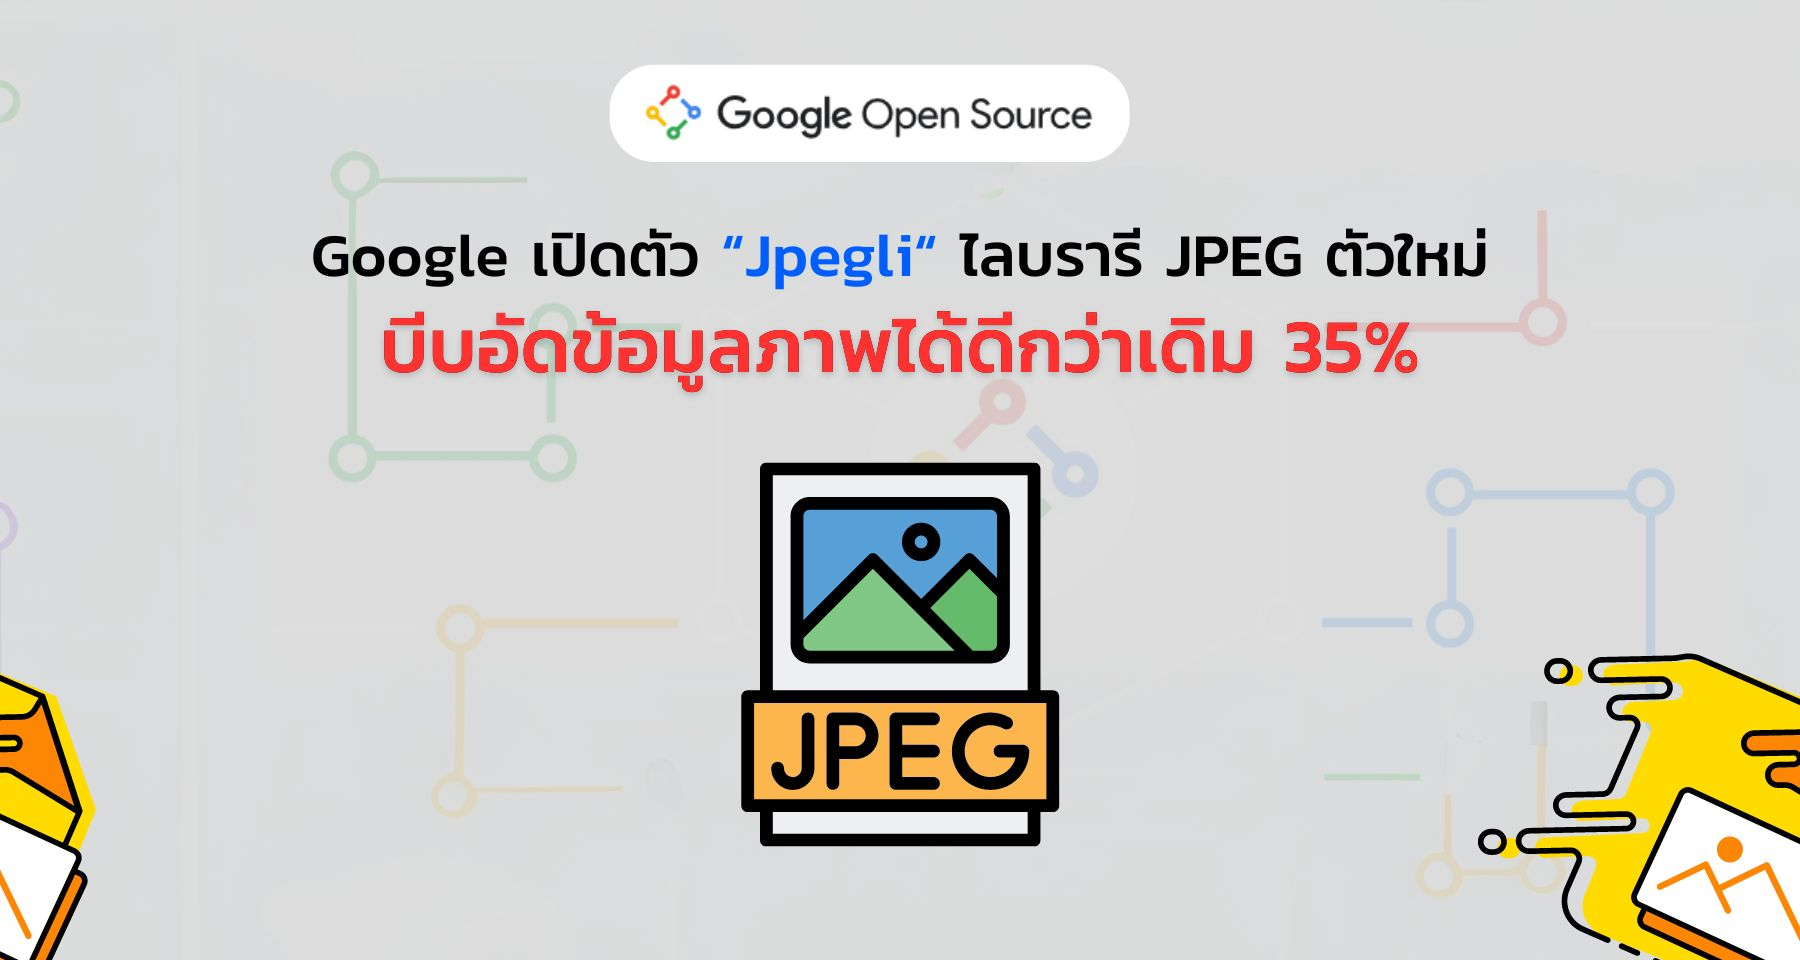 Google เปิดตัว Jpegli ไลบรารี JPEG ตัวใหม่ที่บีบอัดข้อมูลภาพได้ดีกว่าเดิม 35%